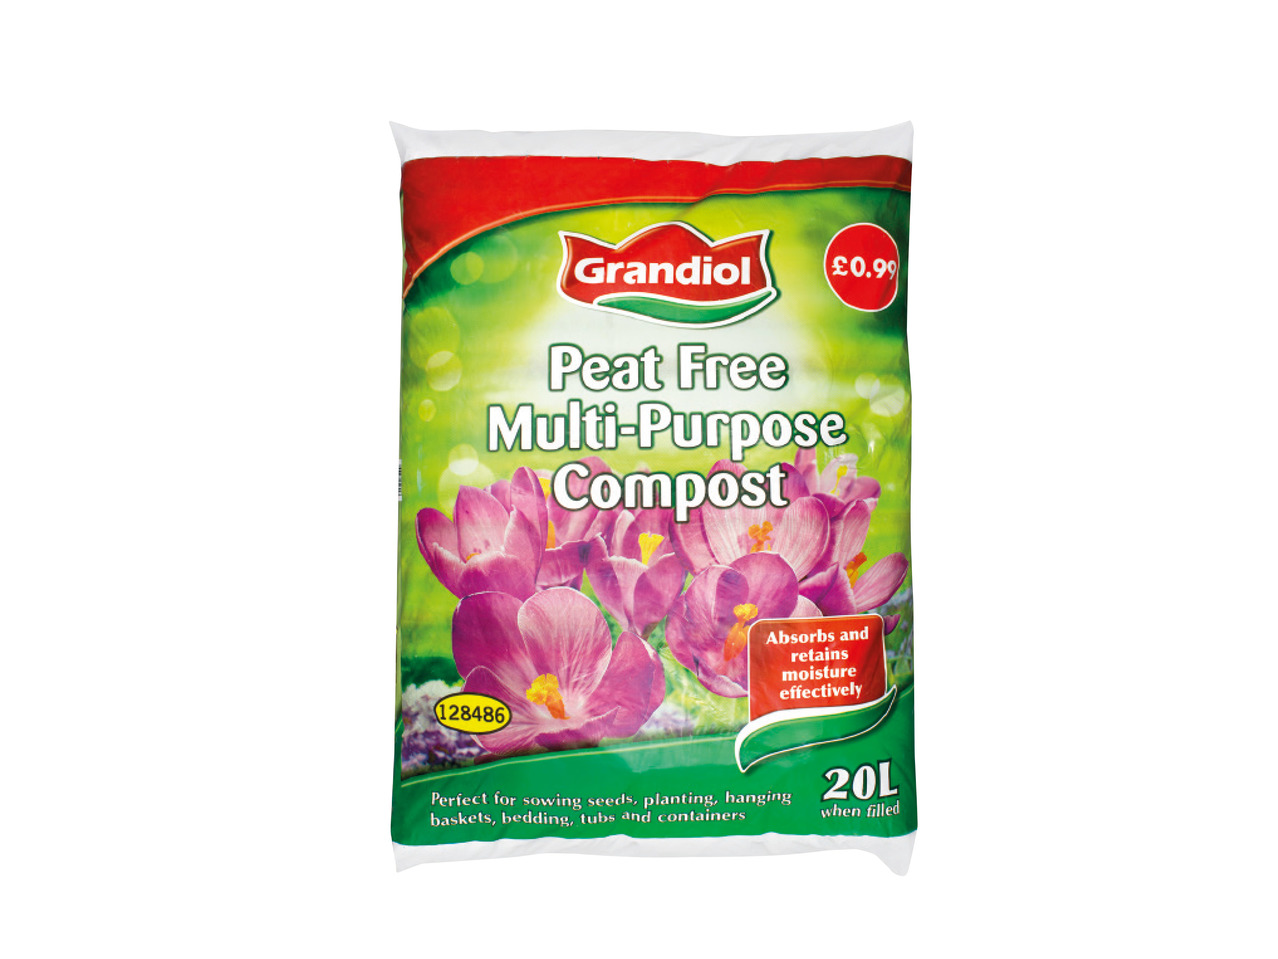 Grandiol Peat Free Multi-Purpose Compost1